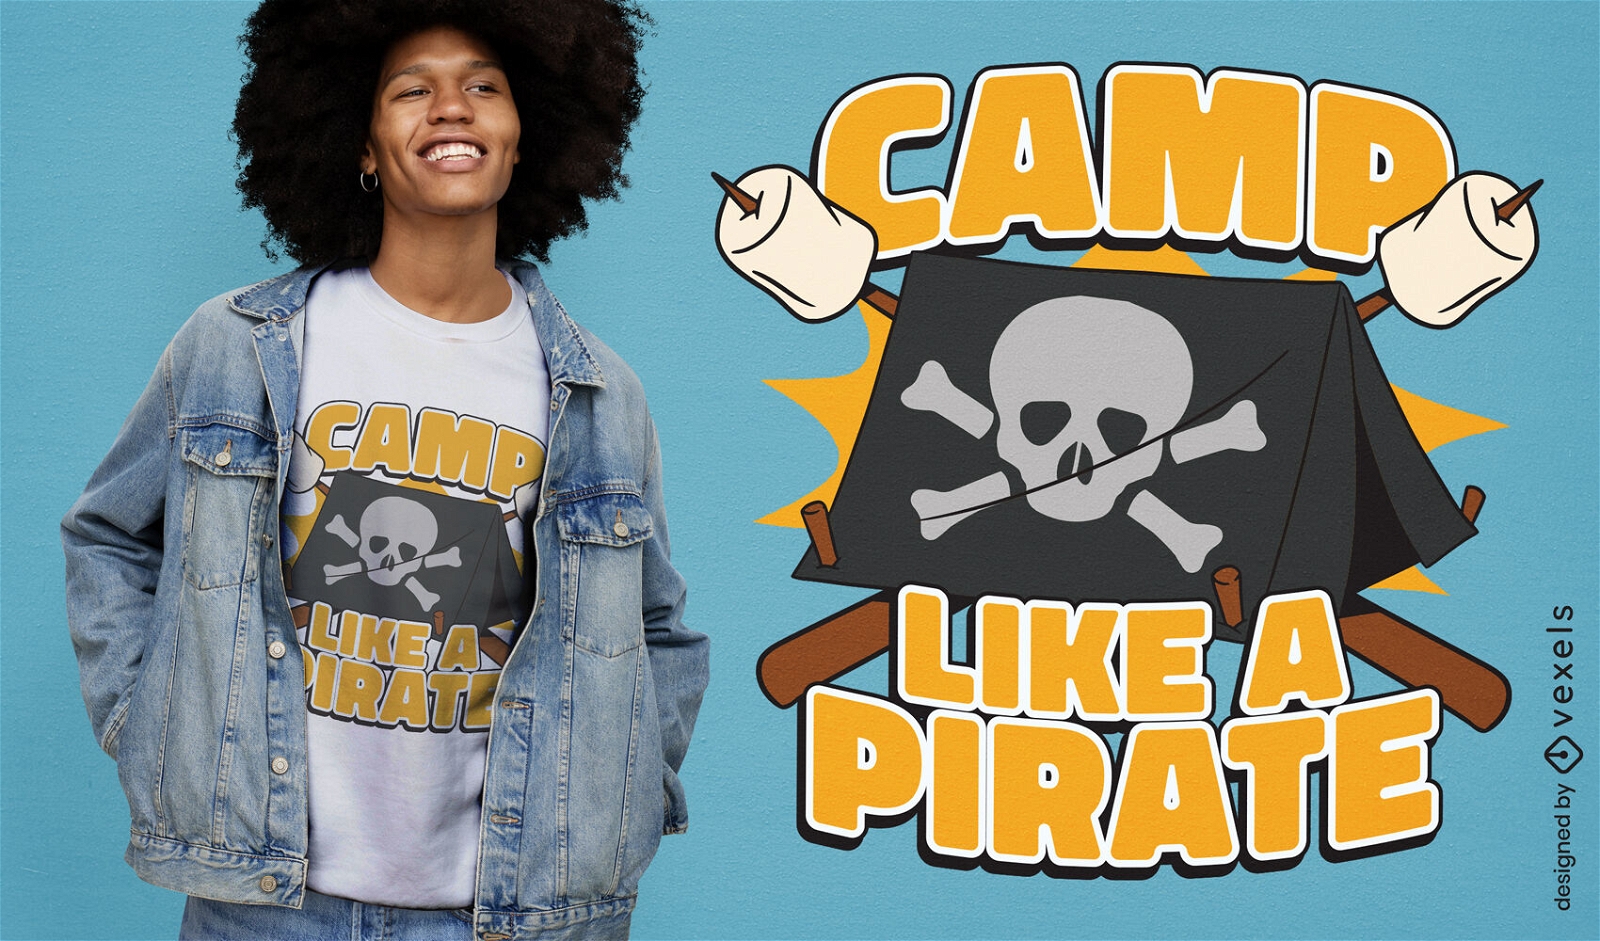 Classic pirate flag t-shirt design